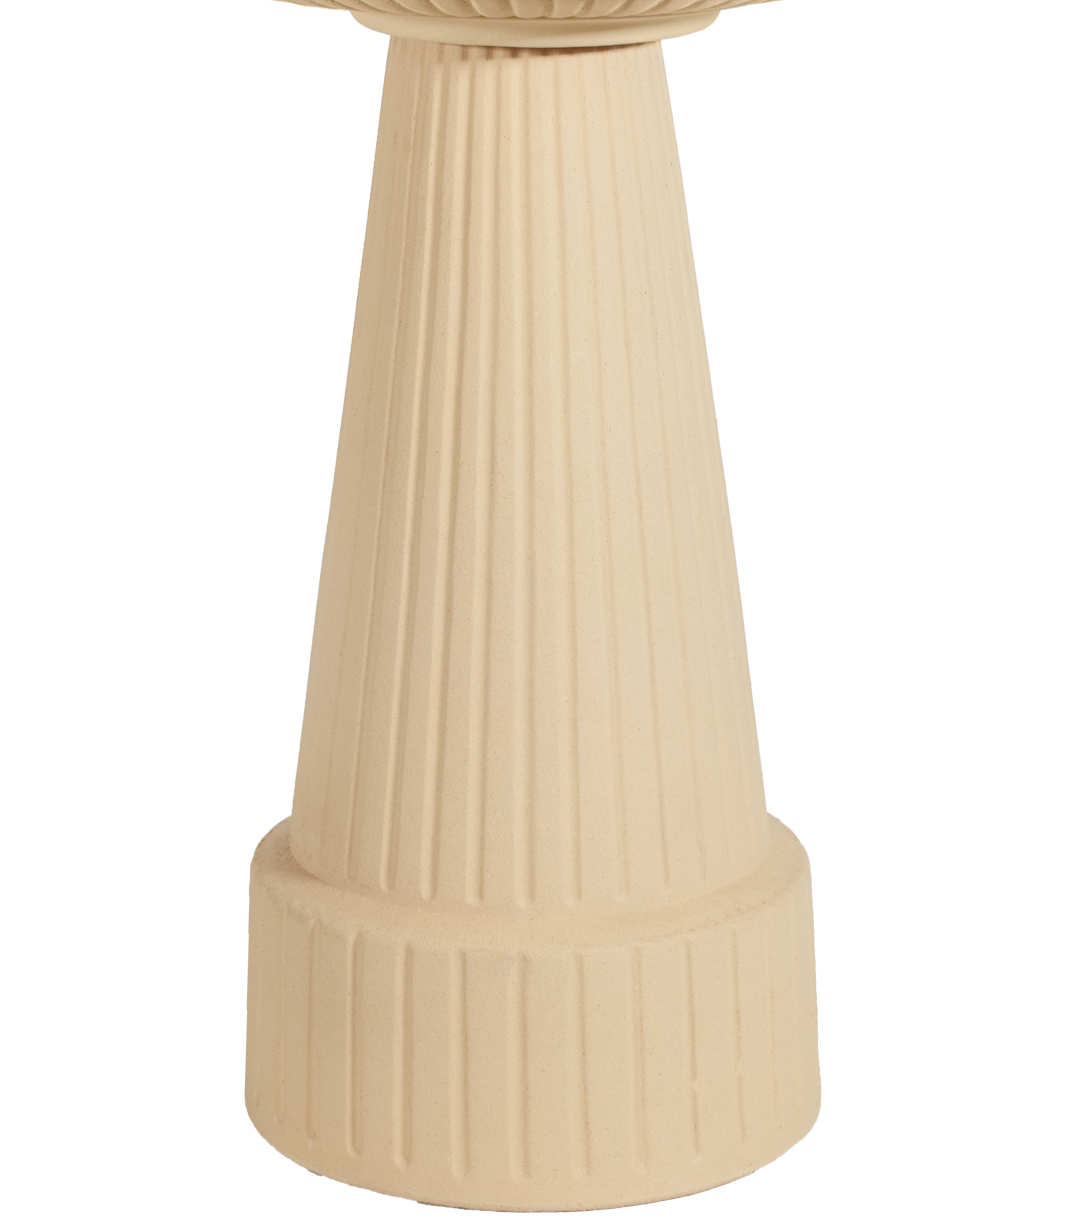 ceramic plain clay pedestal with vertical stripes